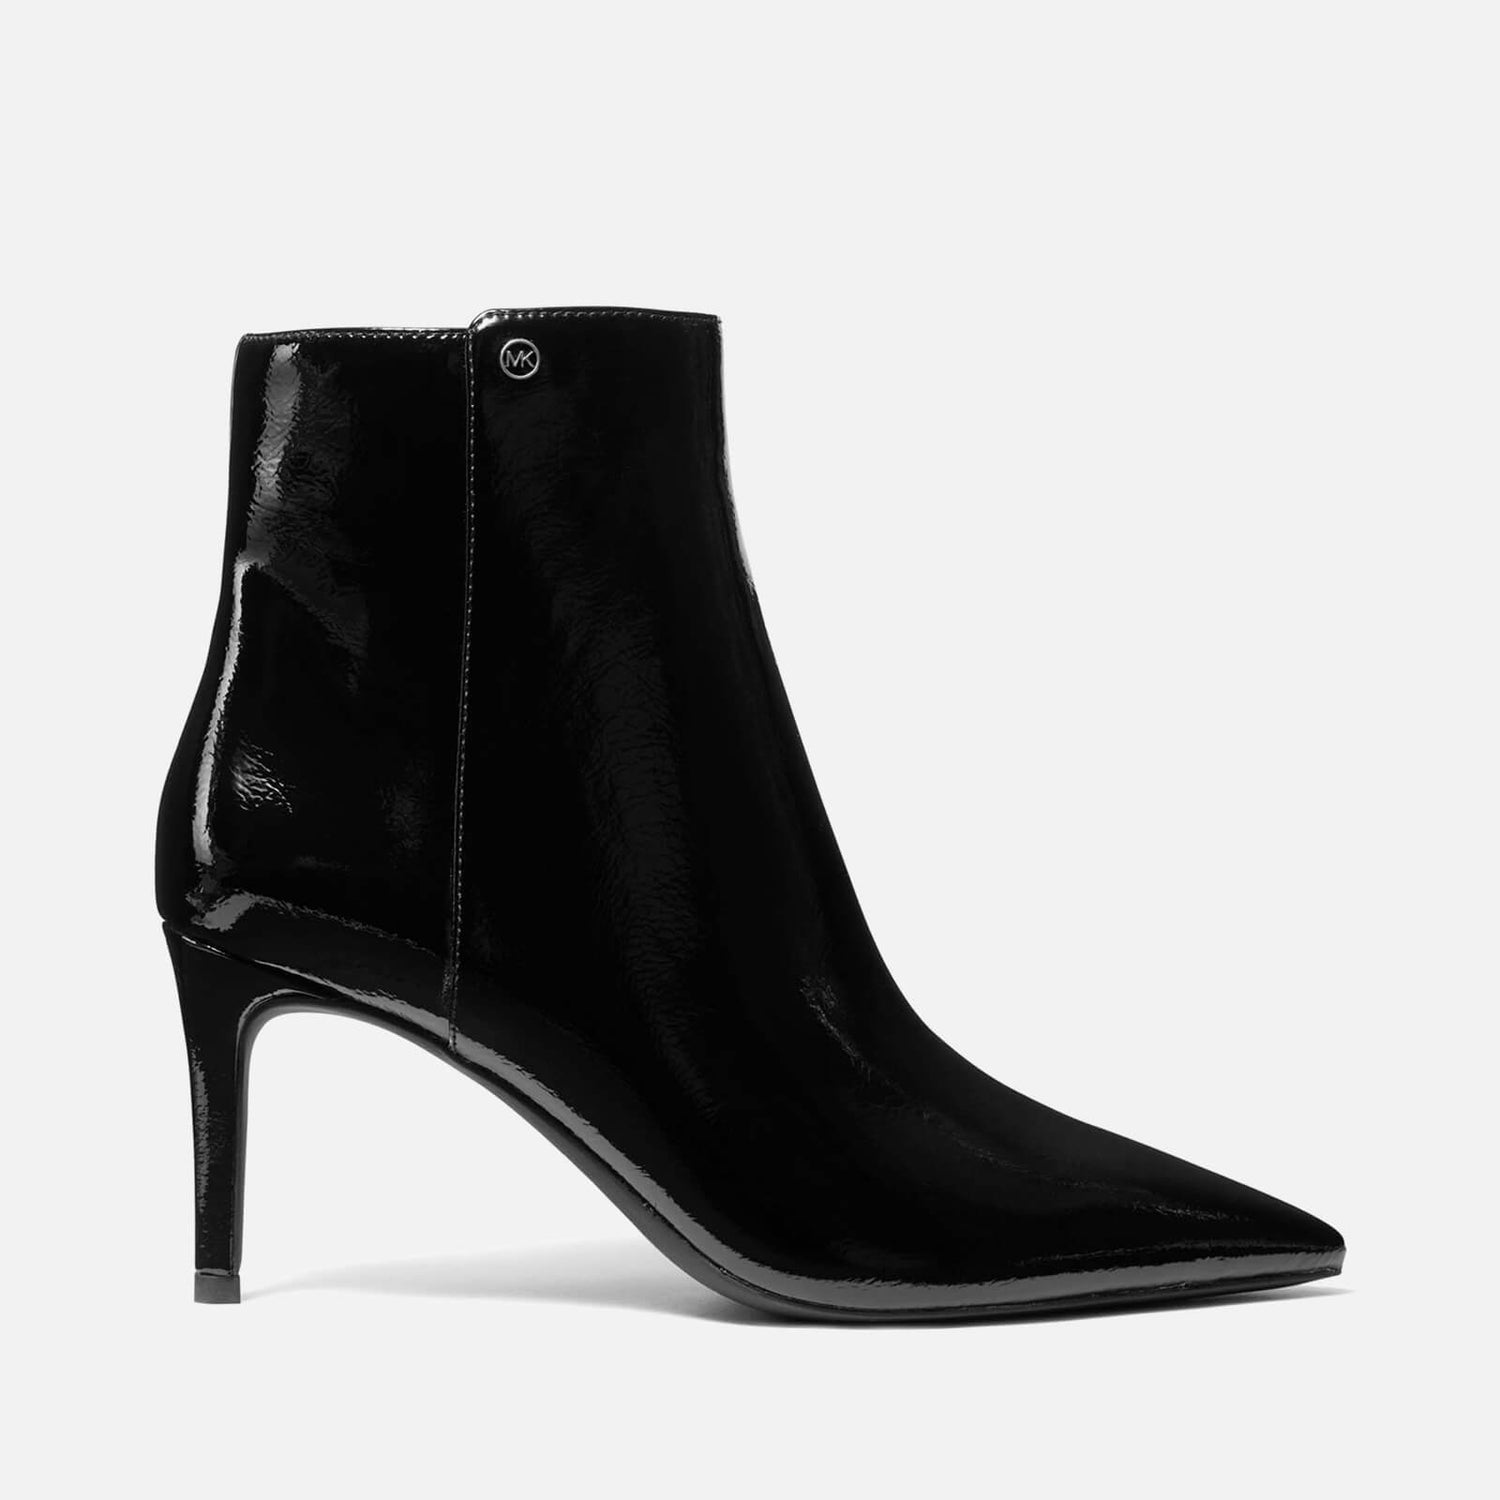 MICHAEL Michael Kors Women's Alina Flex Patent-Leather Boots - UK 4